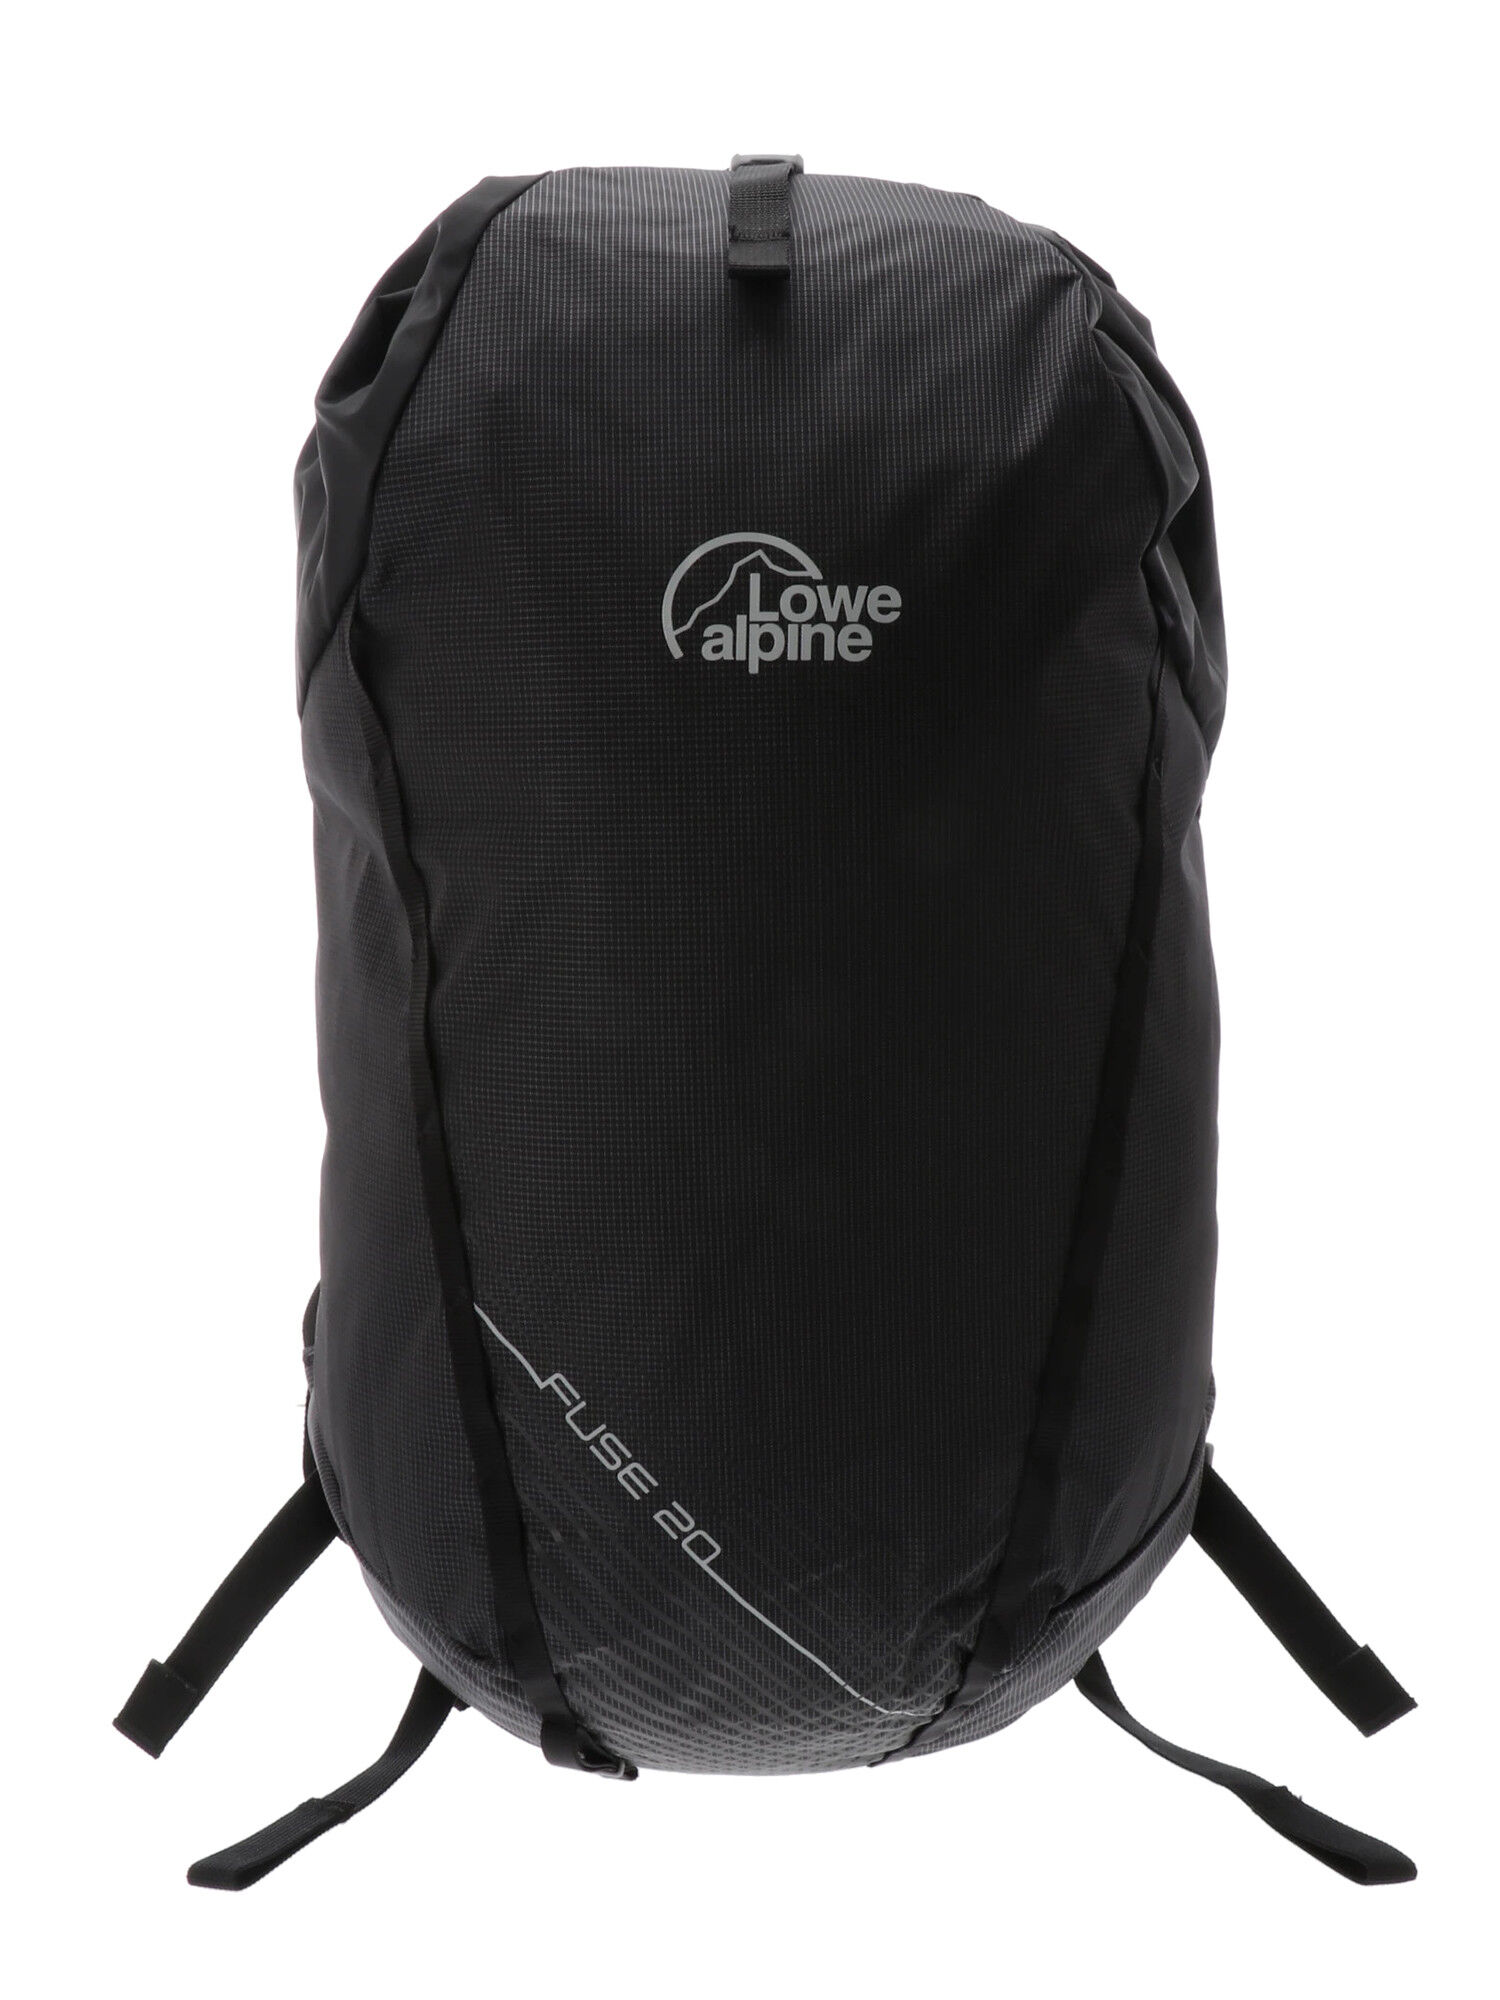 Lowe Alpine Lowe Alpine Fuse 20l Backpack 